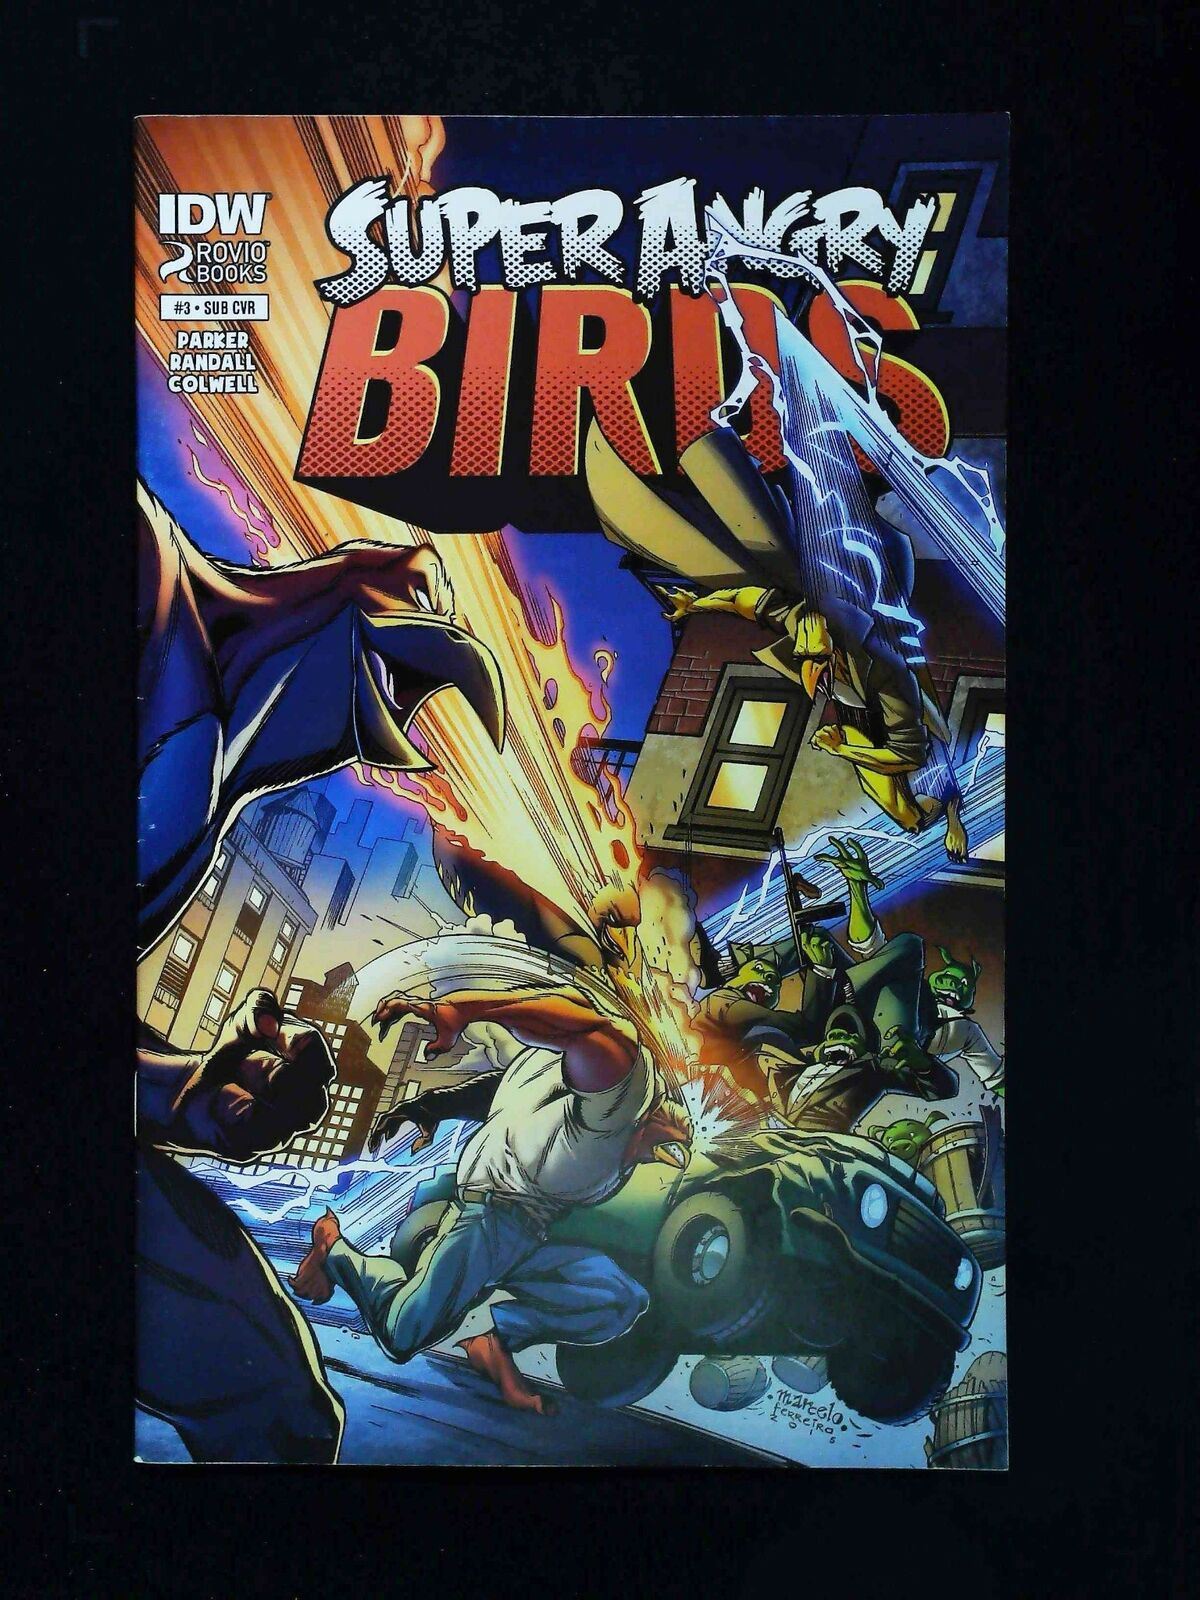 Super Angry Birds #3Sub  Idw Comics 2015 Vf+  Ferreira Variant